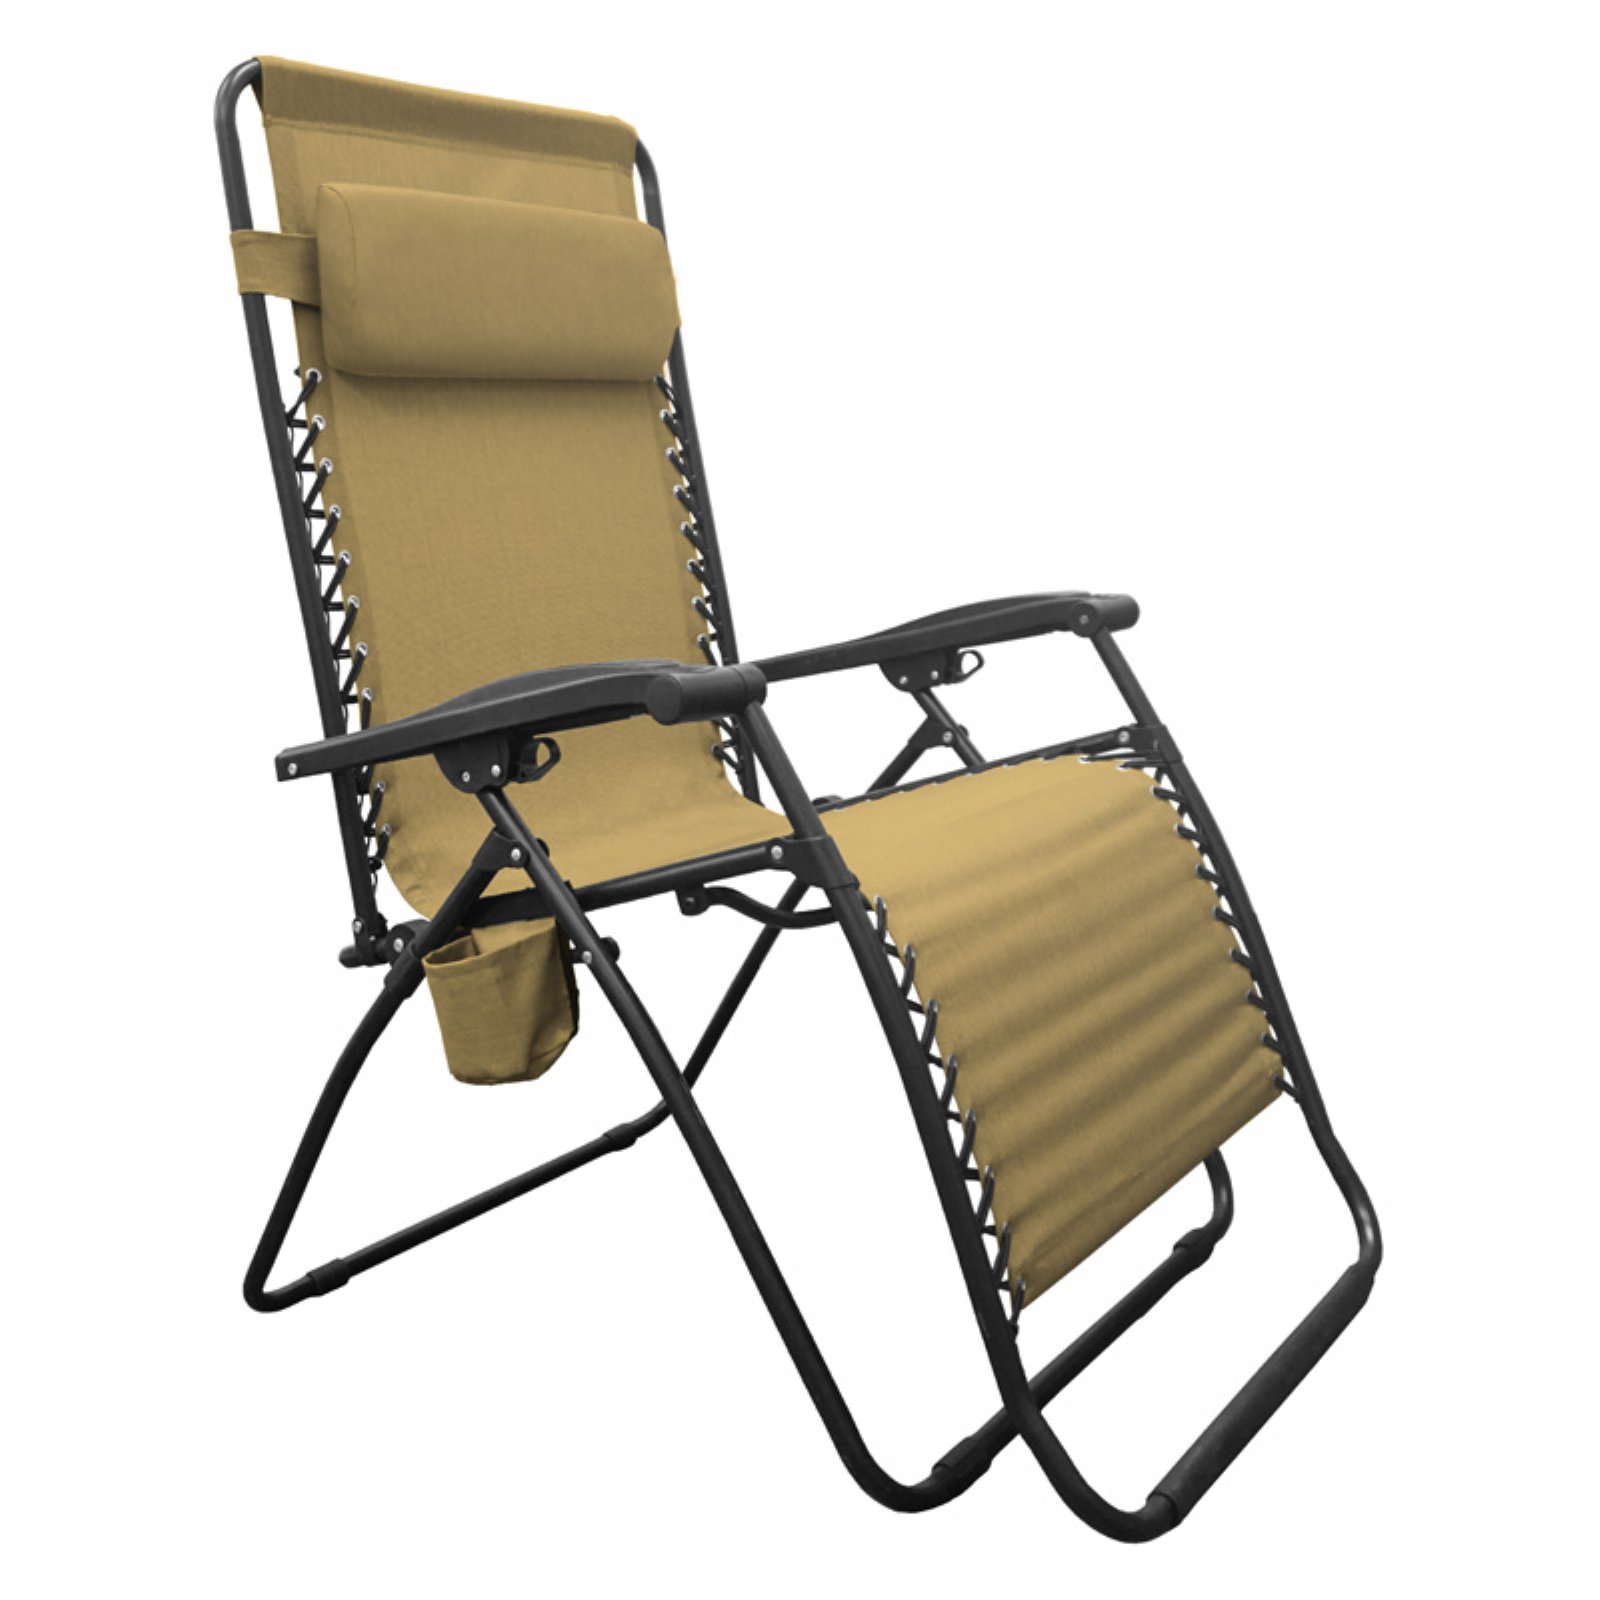 Caravan Sports Infinity Big Boy Zero Gravity Lounge Chair Beige - image 1 of 2